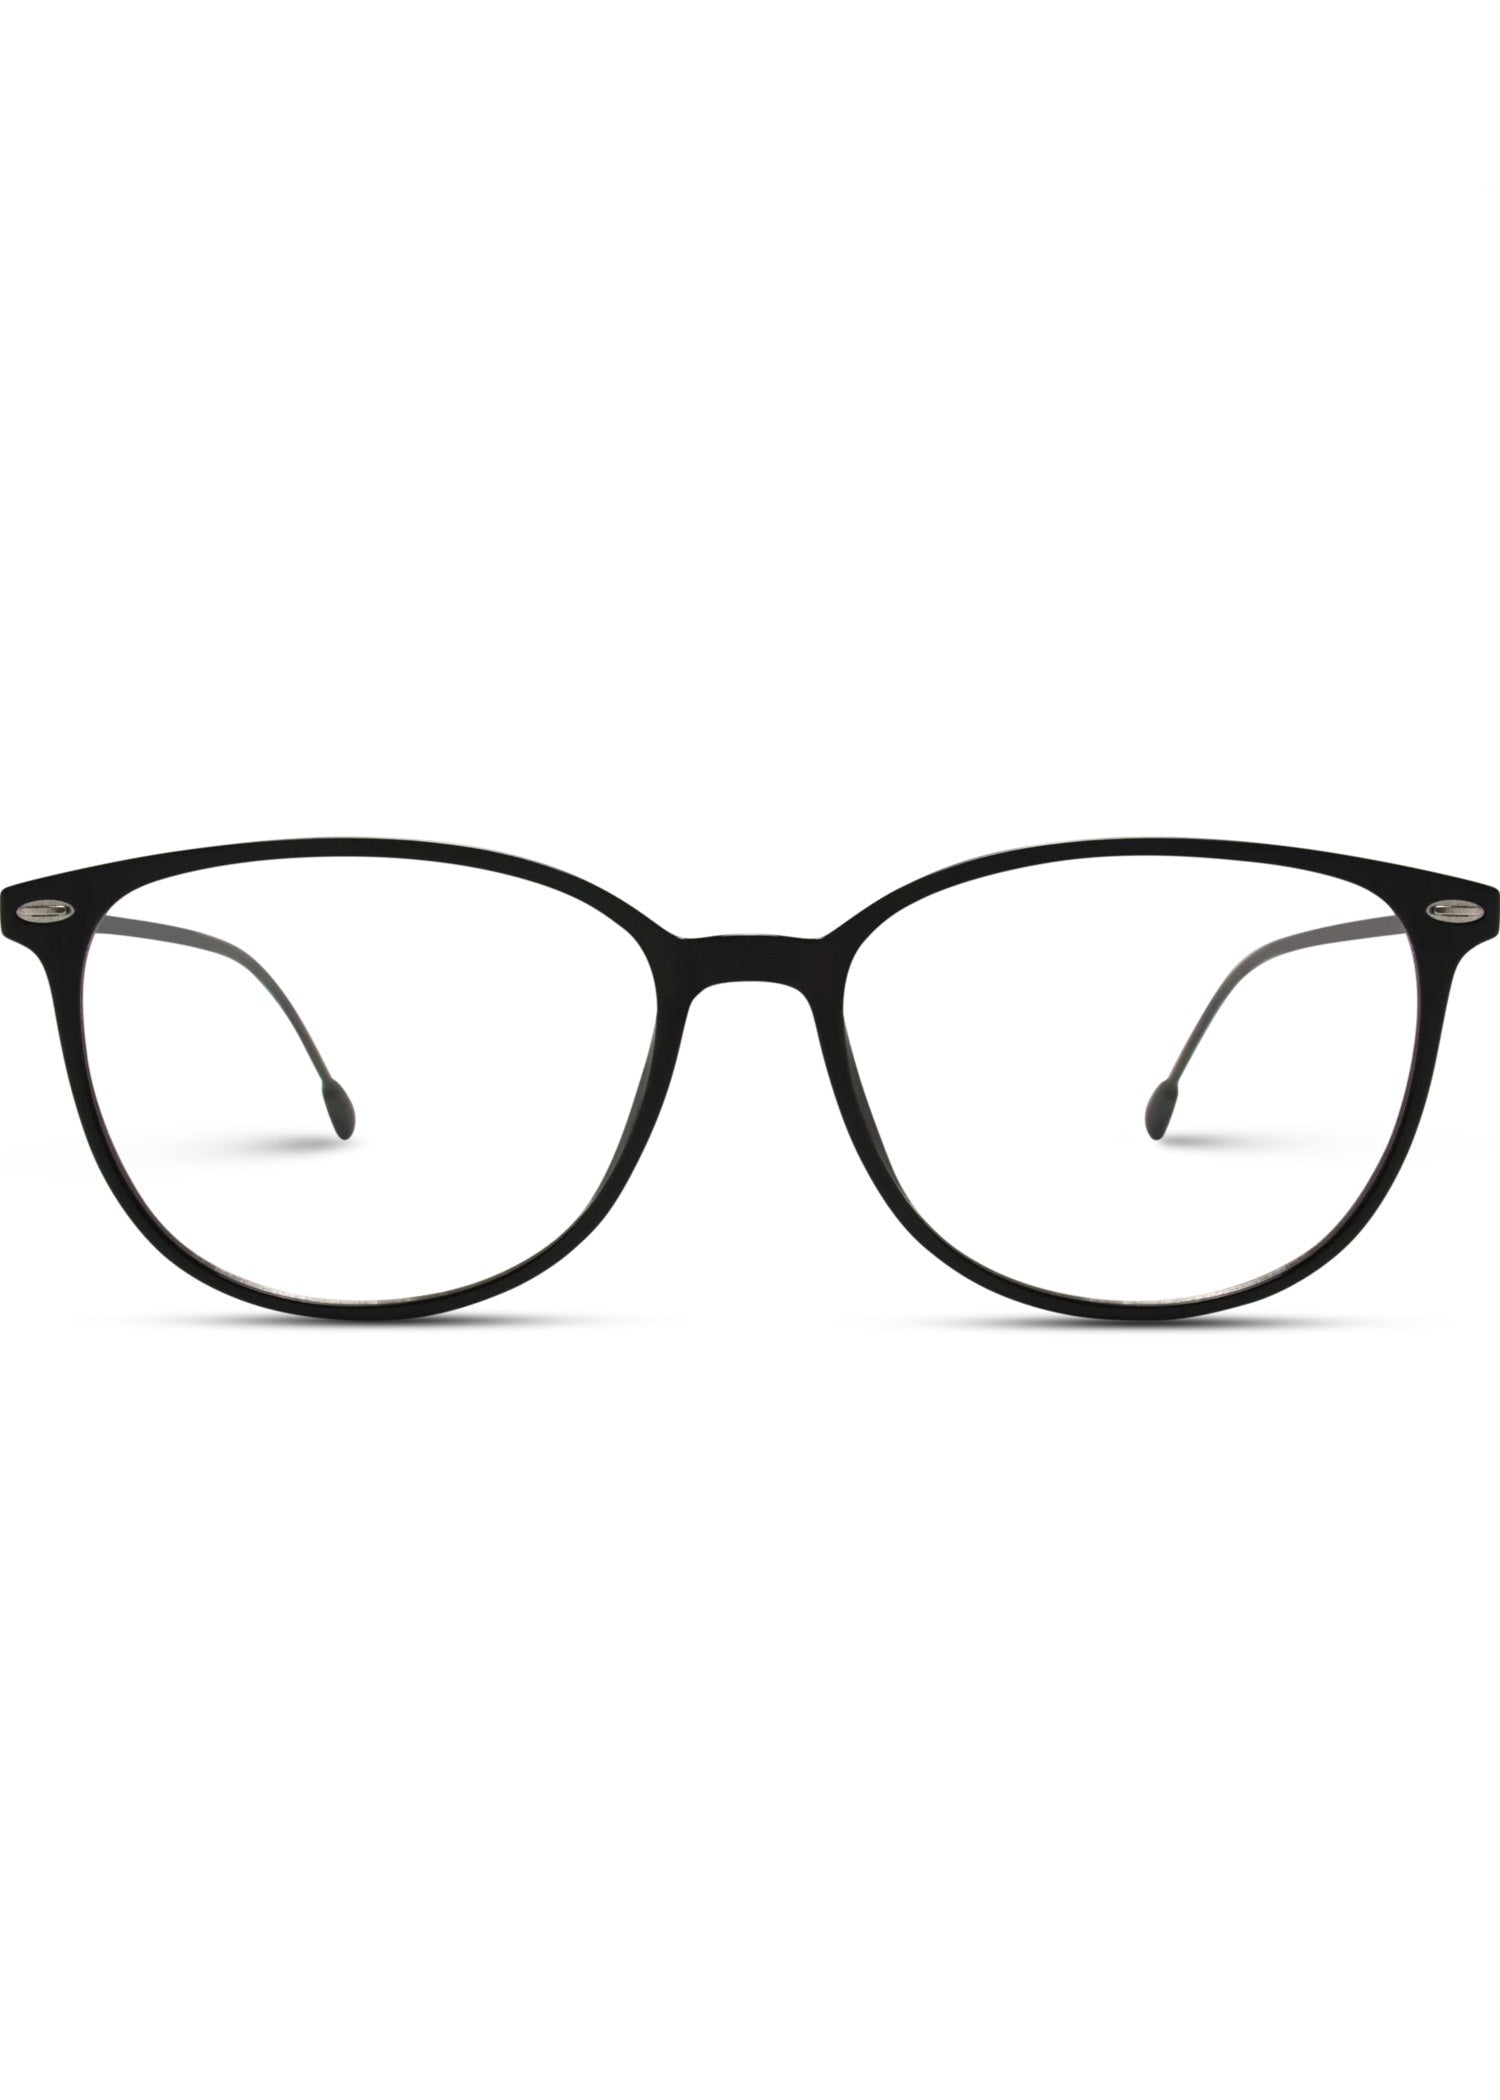 Black Frame Blue Light Glasses - FINAL SALE Accessories